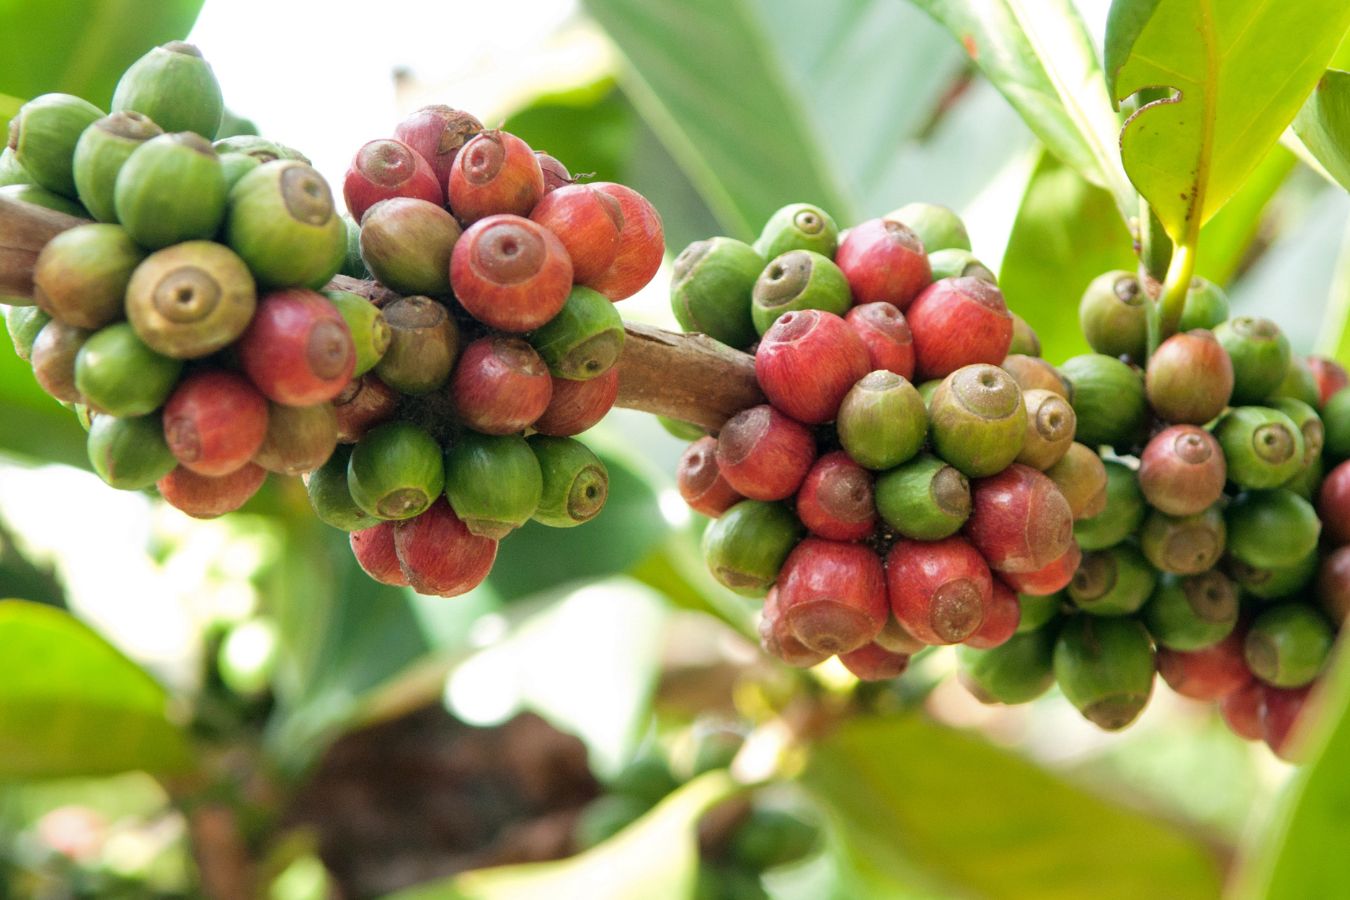 Typica Coffee – Origin & Biological Characteristics